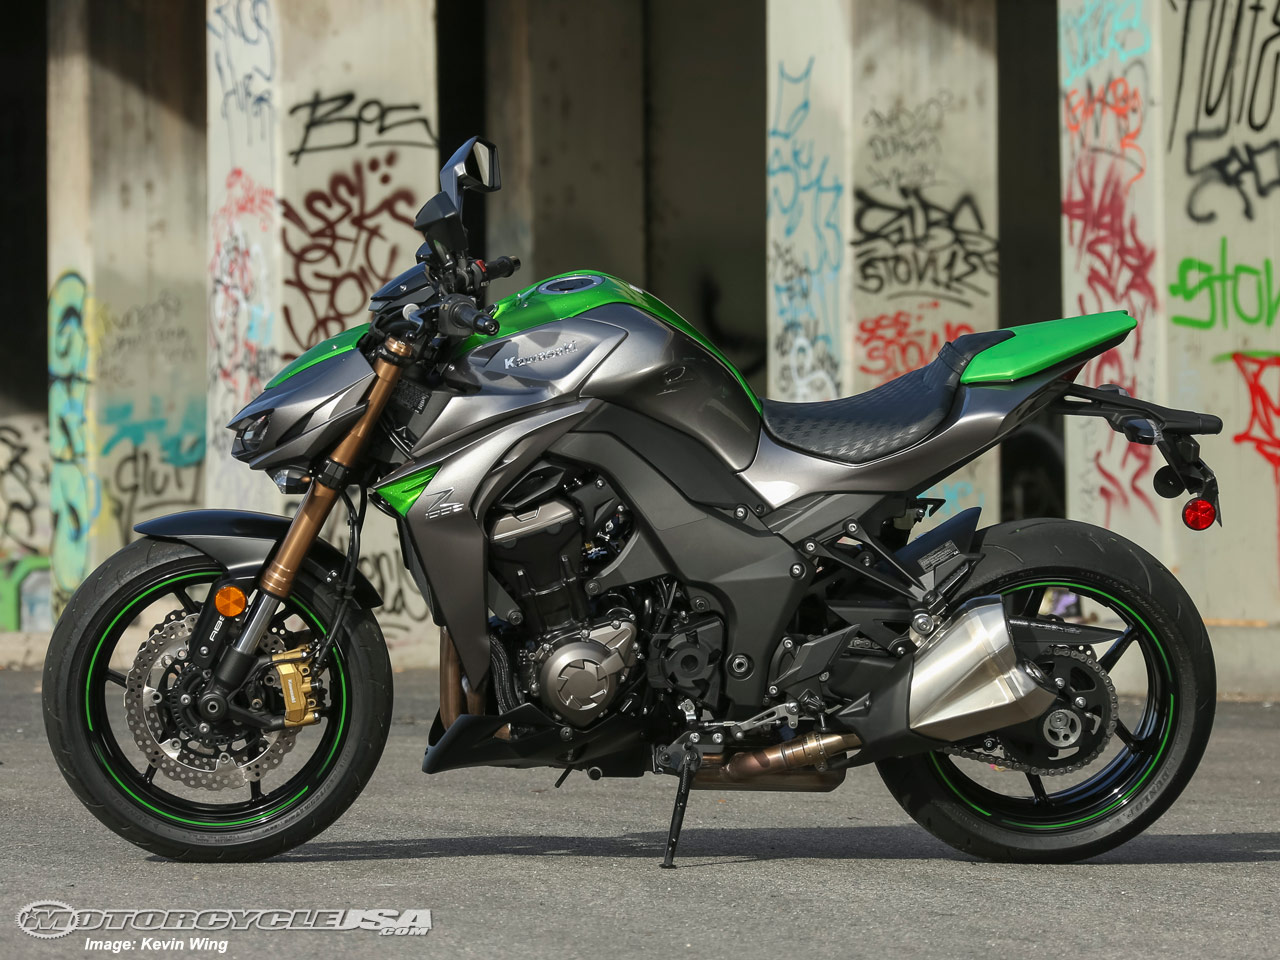 2017 Kawasaki Z1000R Motorcycle Test Ride Review | AutoTrader.ca